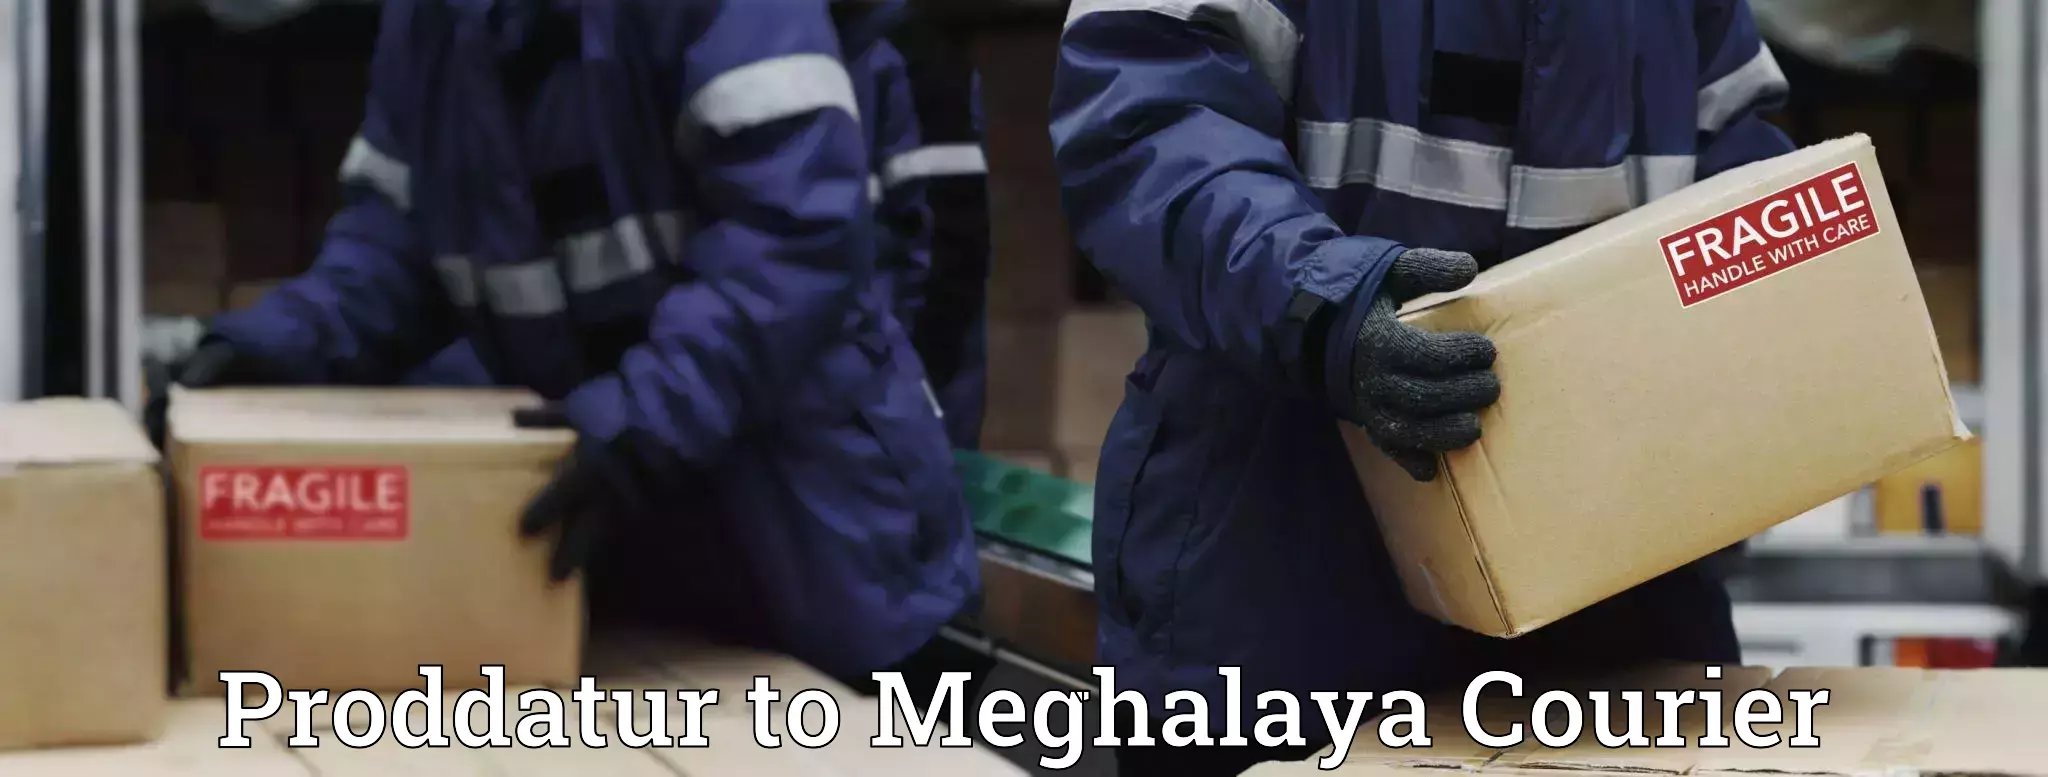 E-commerce shipping Proddatur to Meghalaya